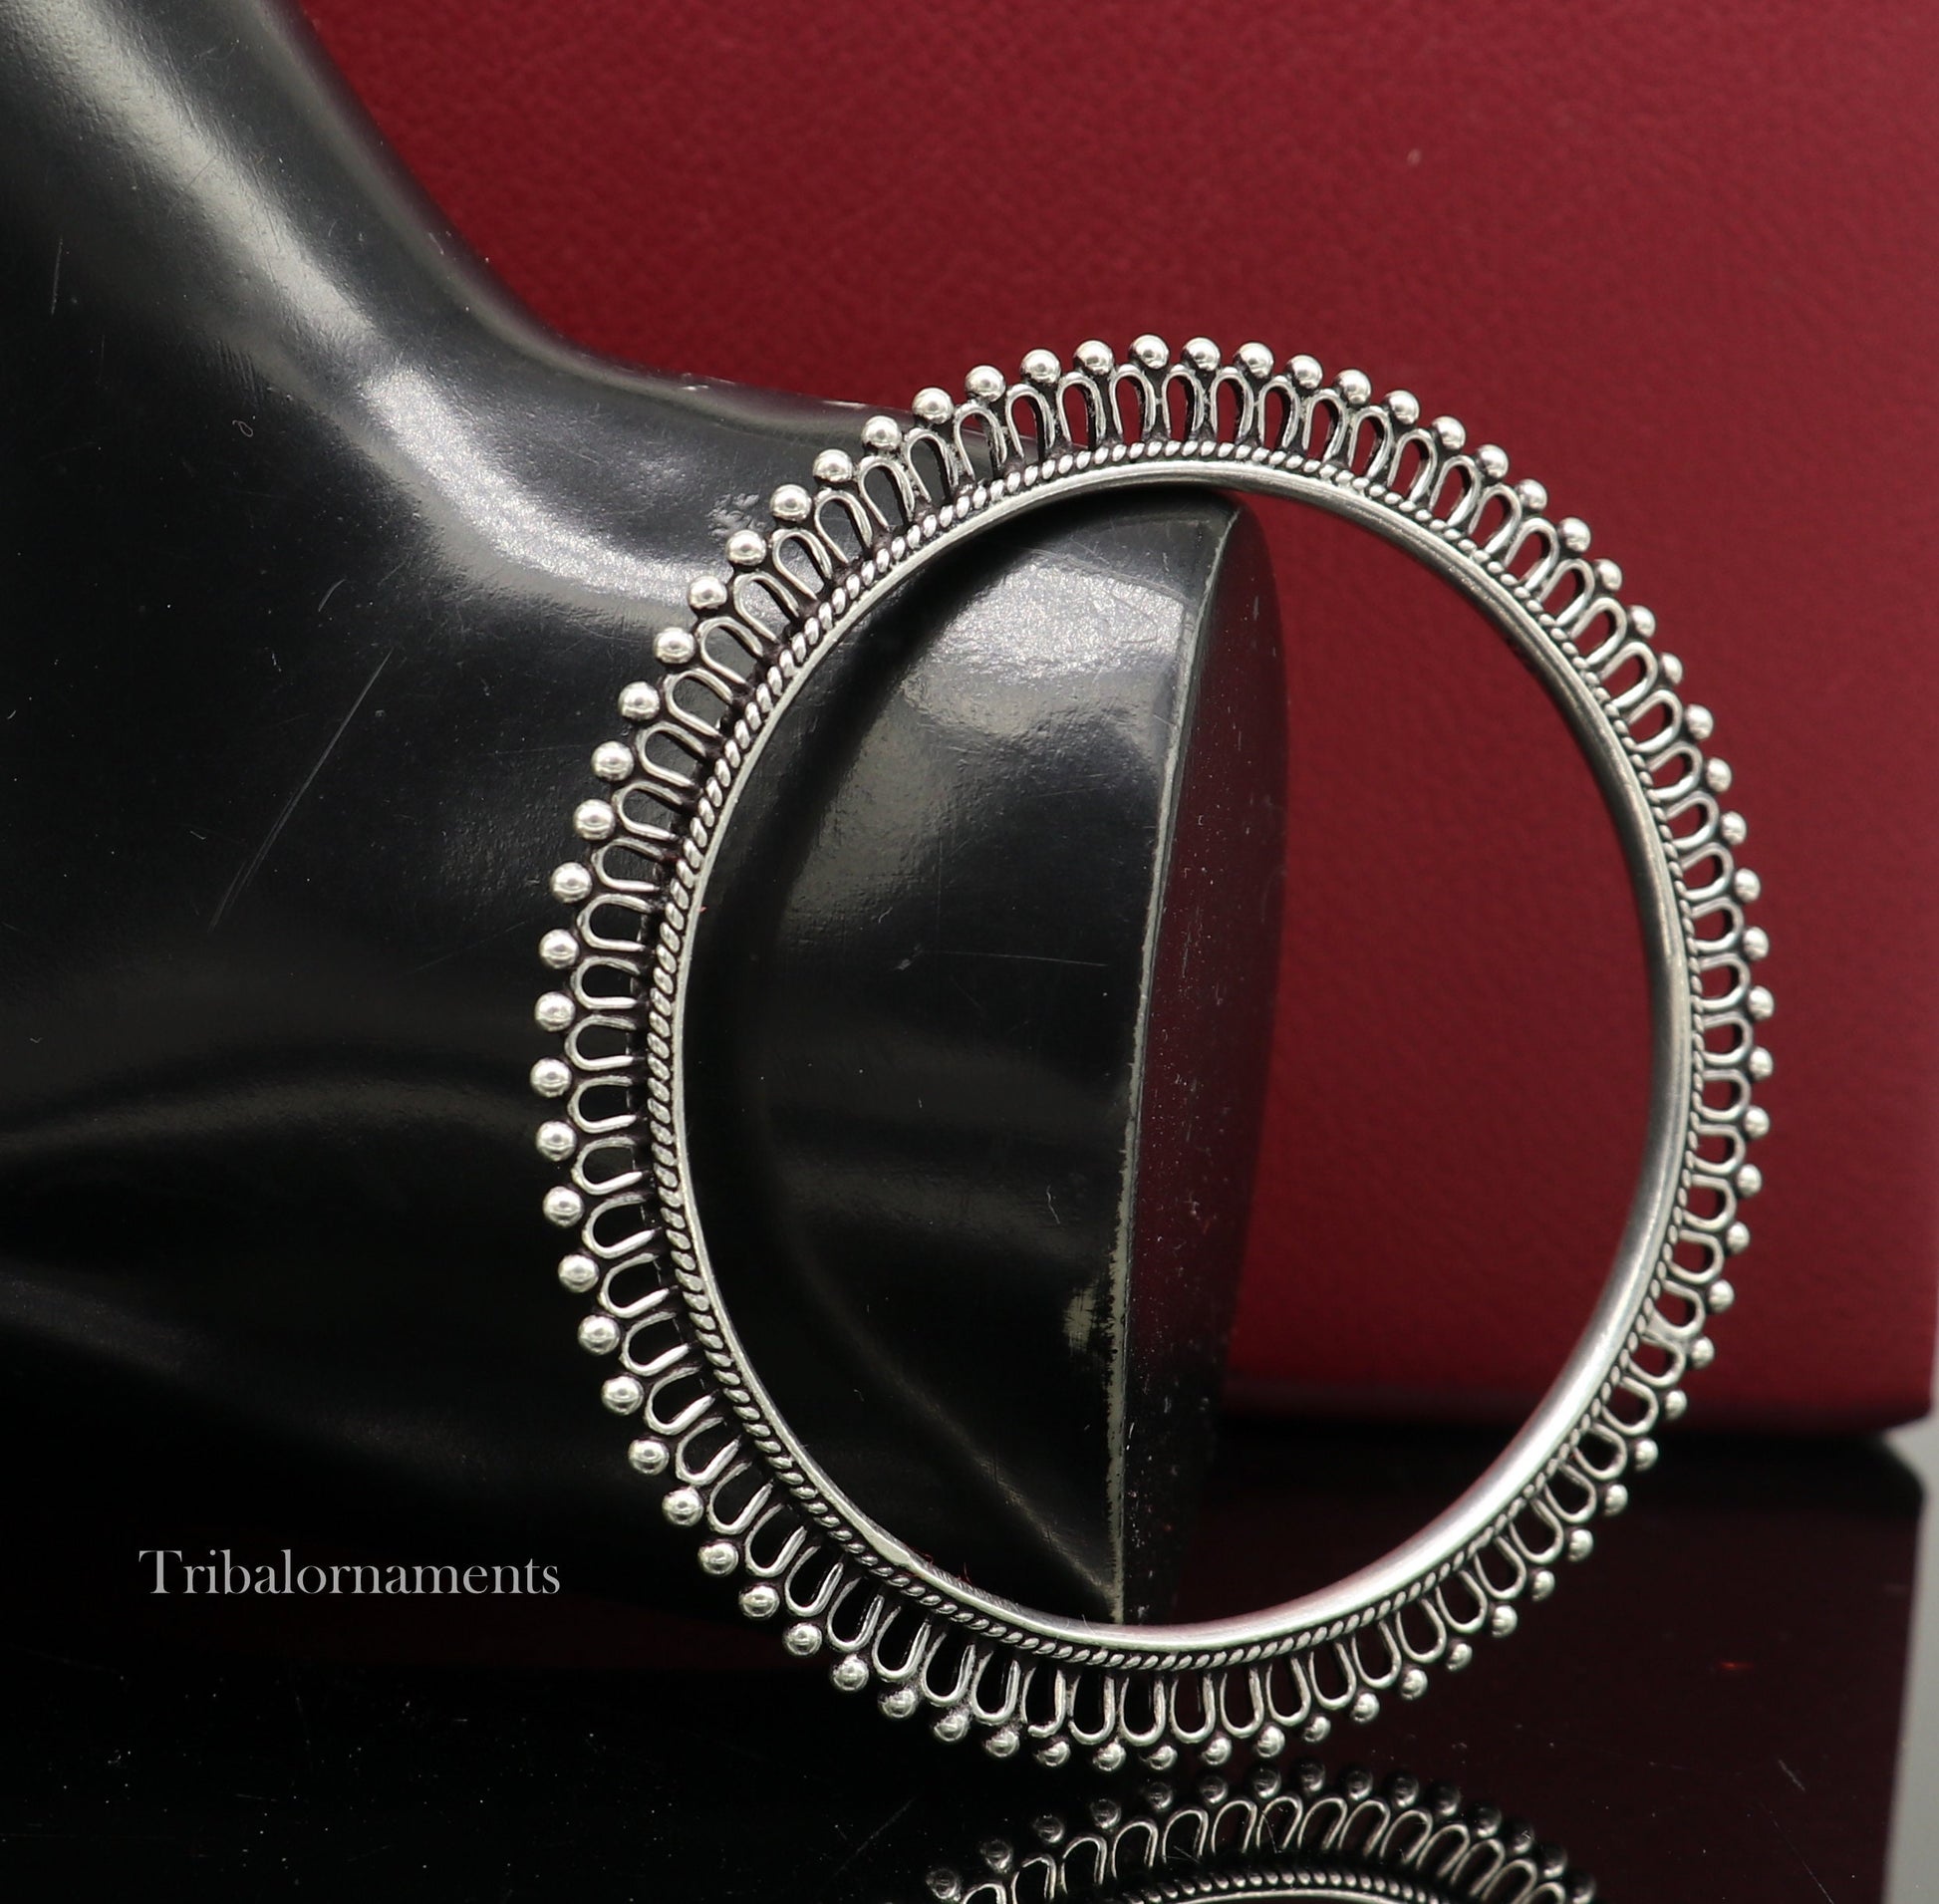 92.5 sterling silver handmade gorgeous bangle bracelet with tiny silver beads gorgeous charm bracelet kada for women ethnic jewelry nba202 - TRIBAL ORNAMENTS